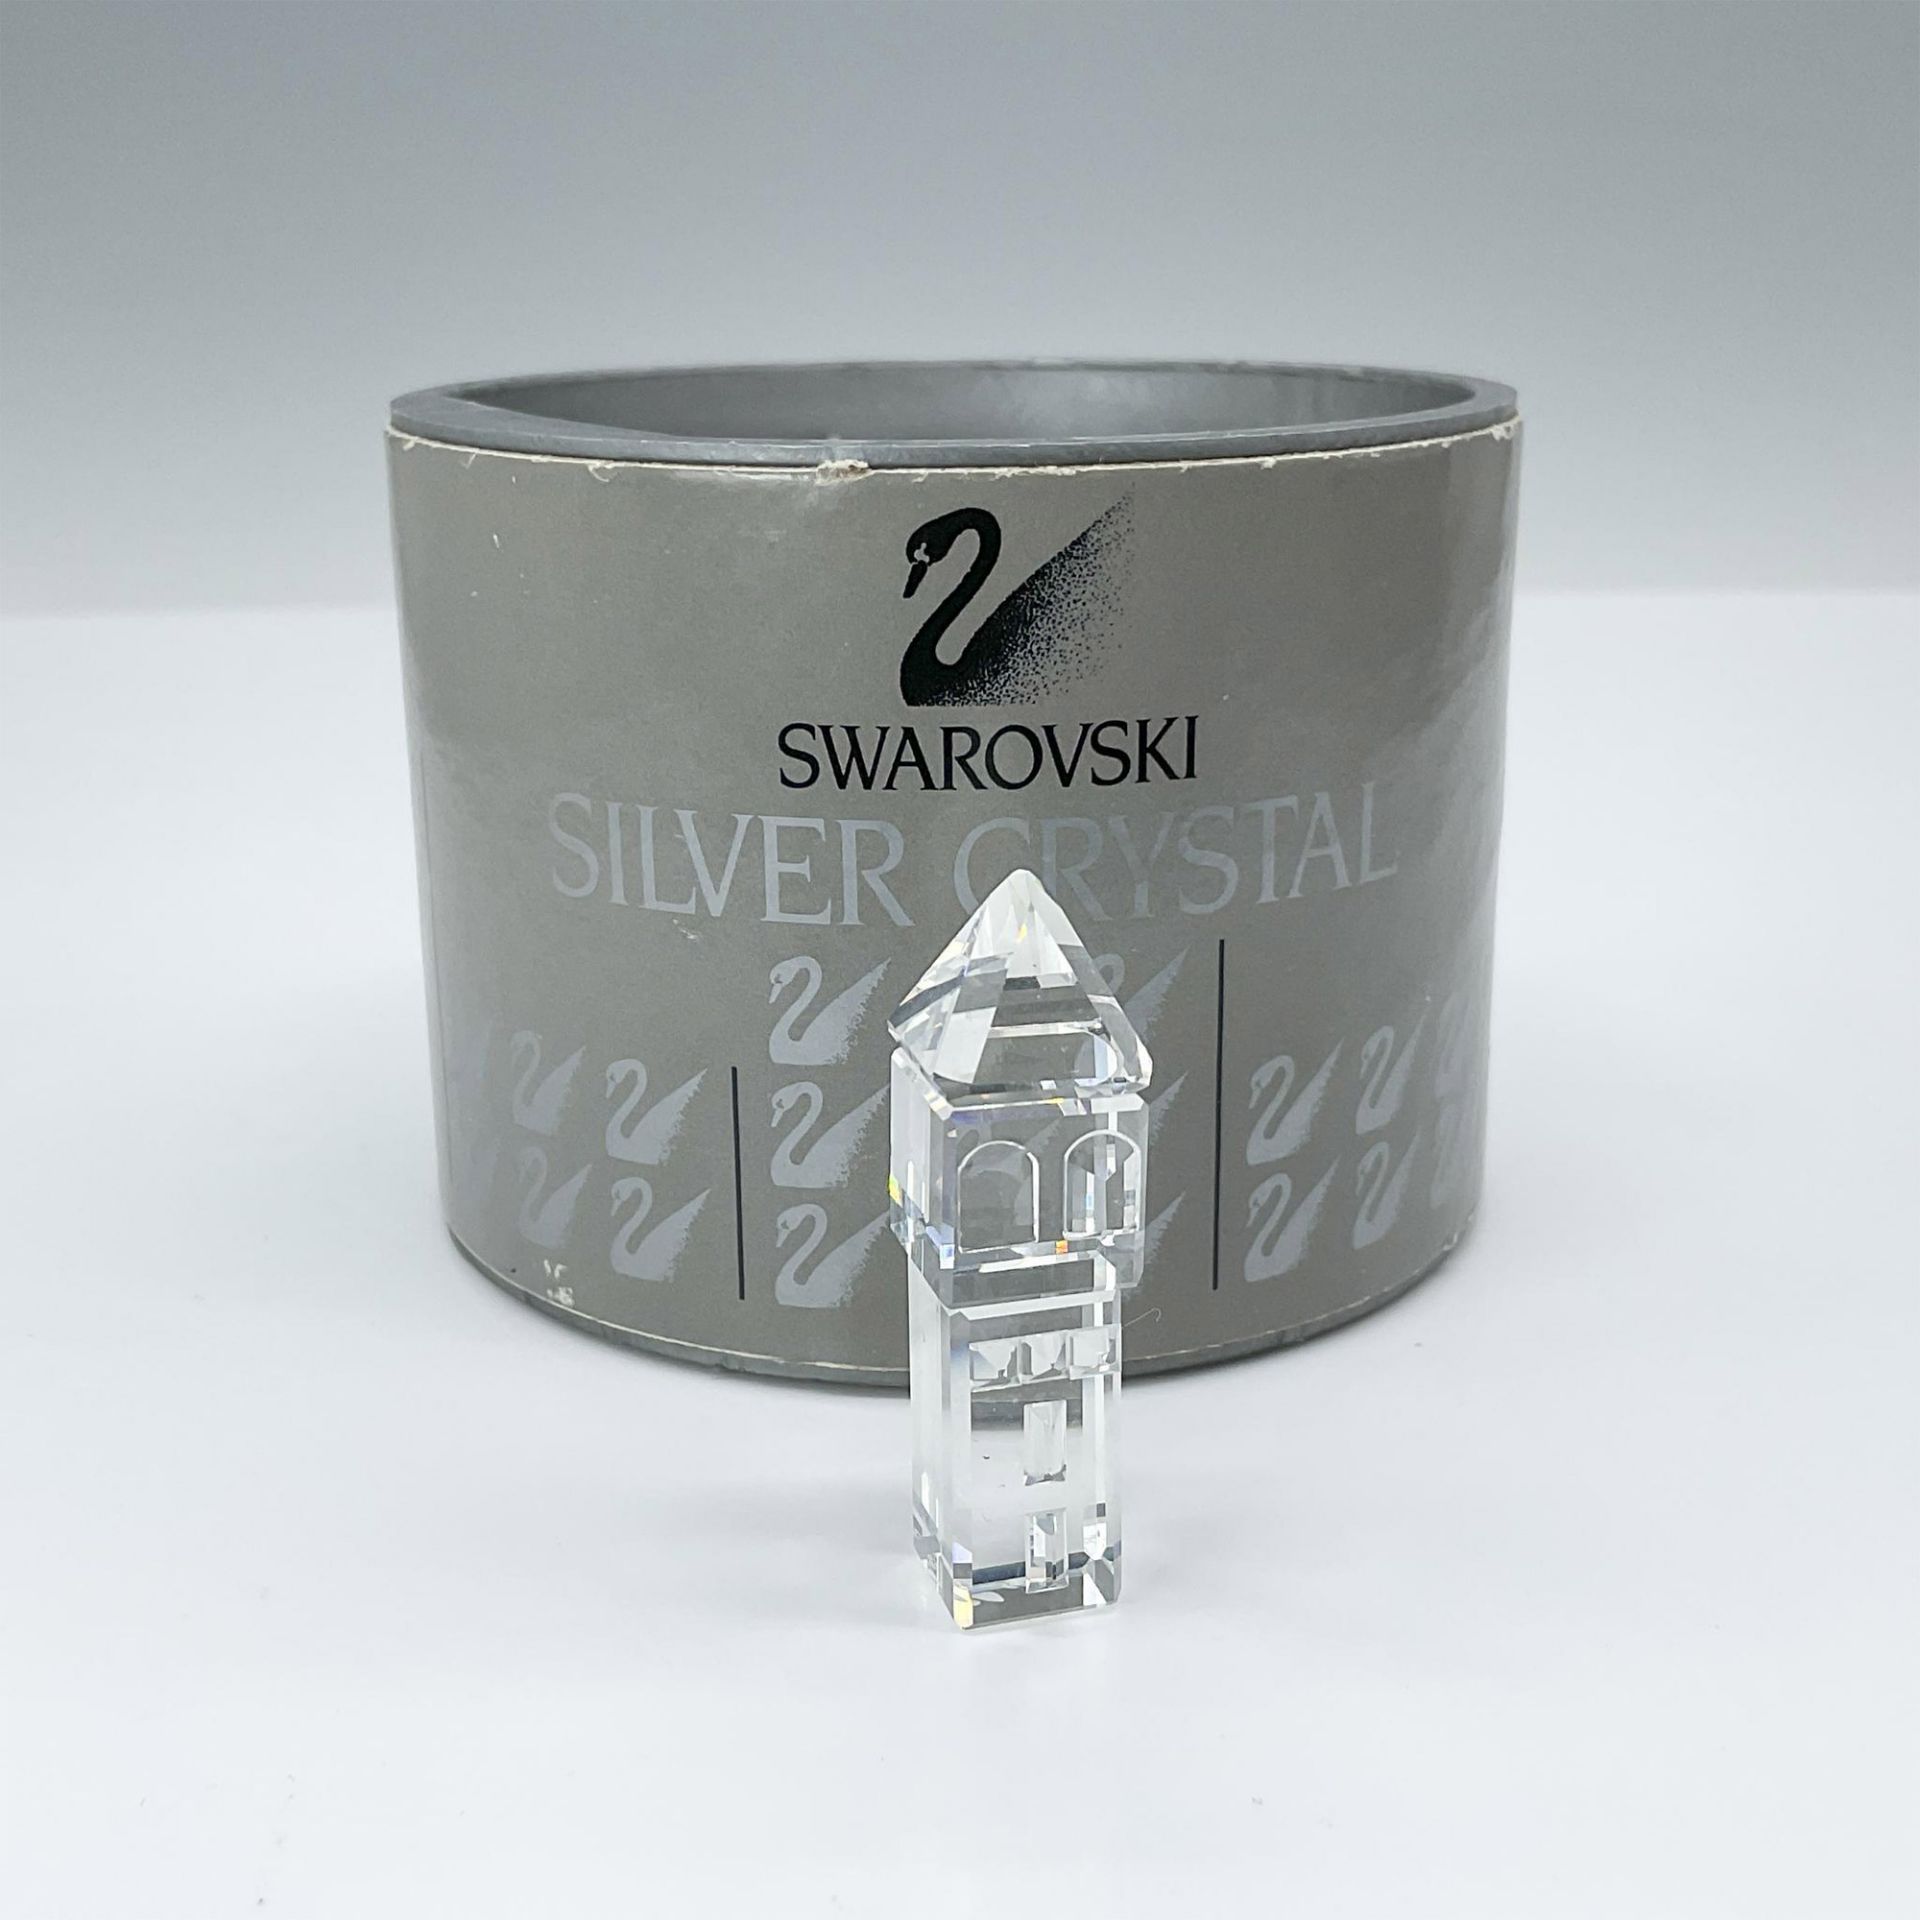 Swarovski Silver Crystal Figurine, City Tower - Image 4 of 4